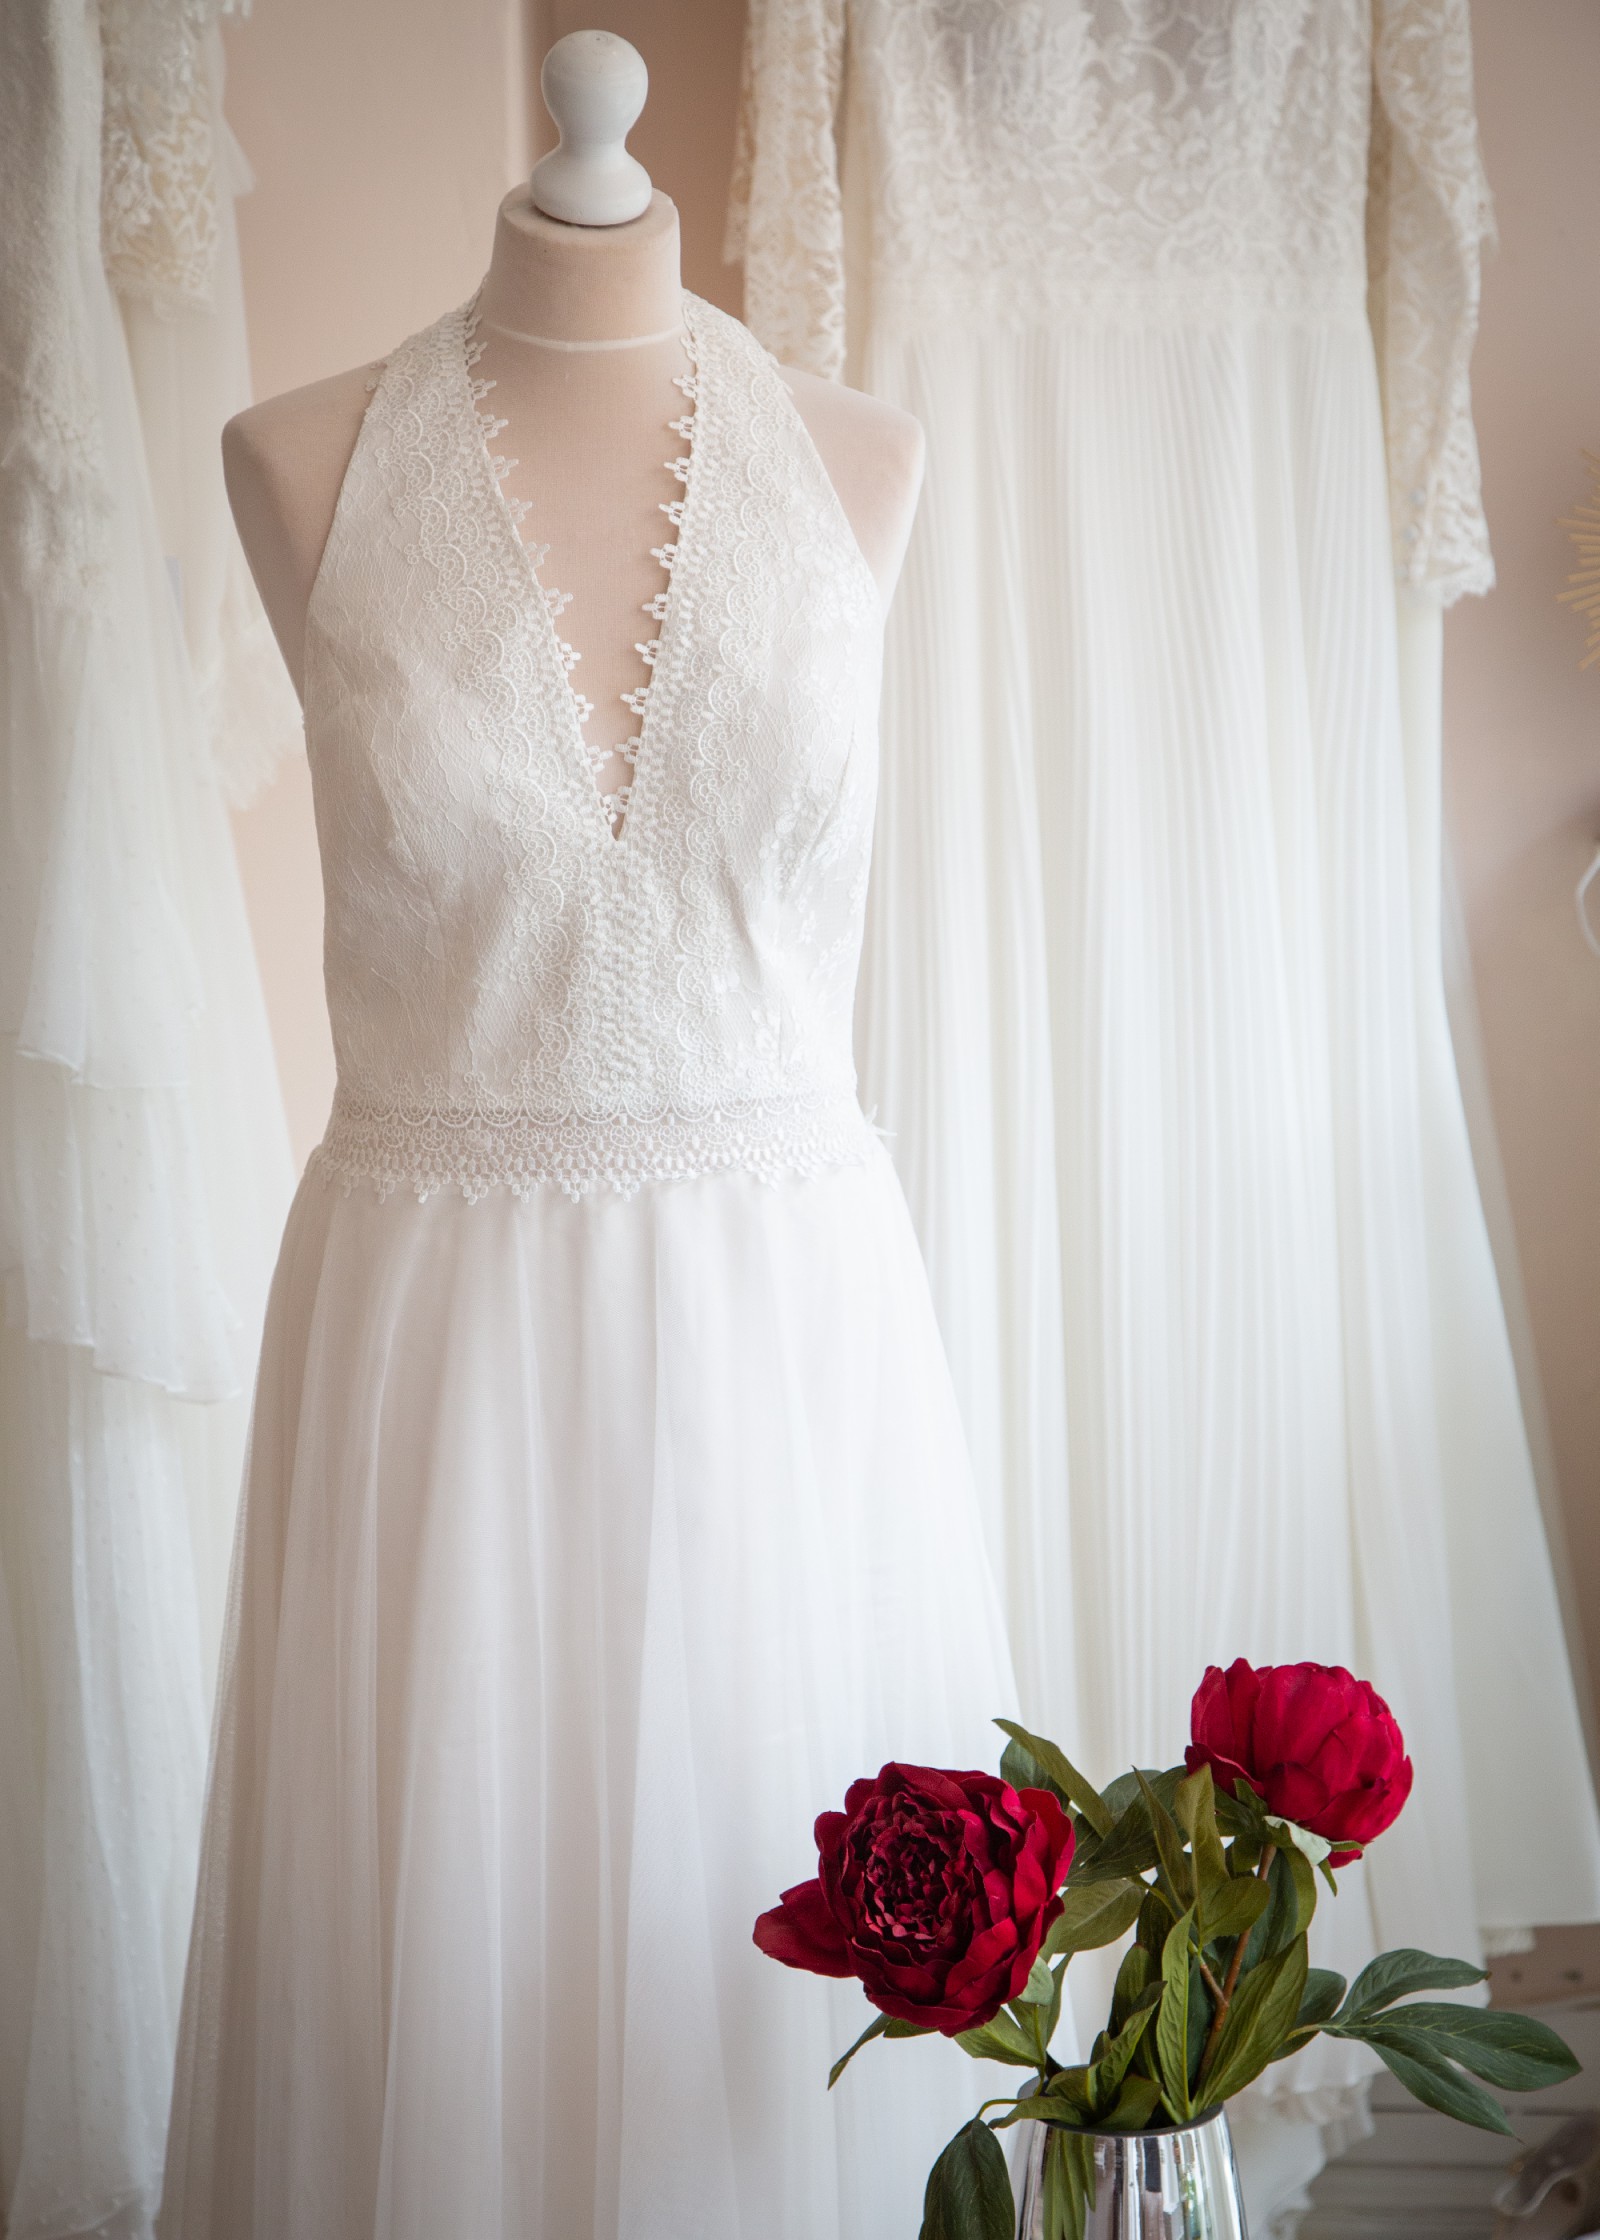 Kelsey Rose Sample Wedding Dress Save 67% - Stillwhite